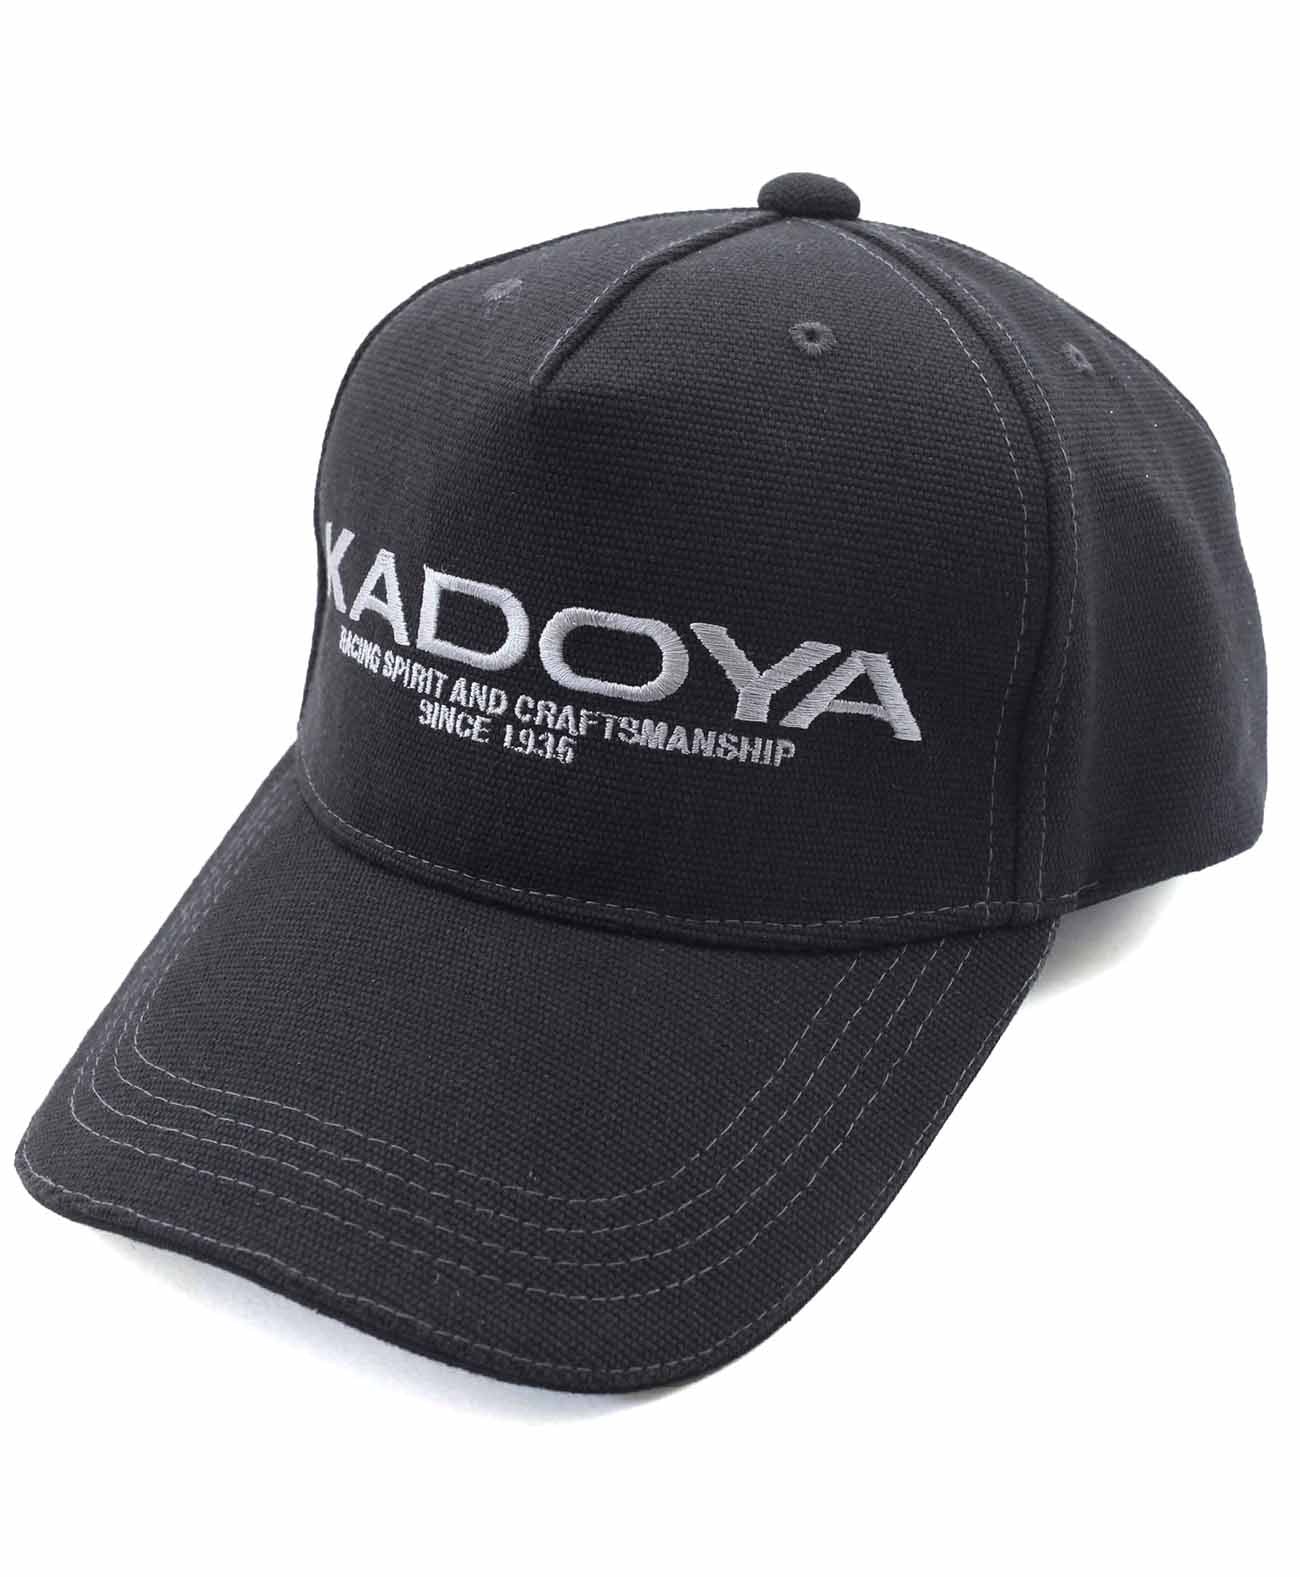 Kadoya徽标帽 /黑色 /灰色